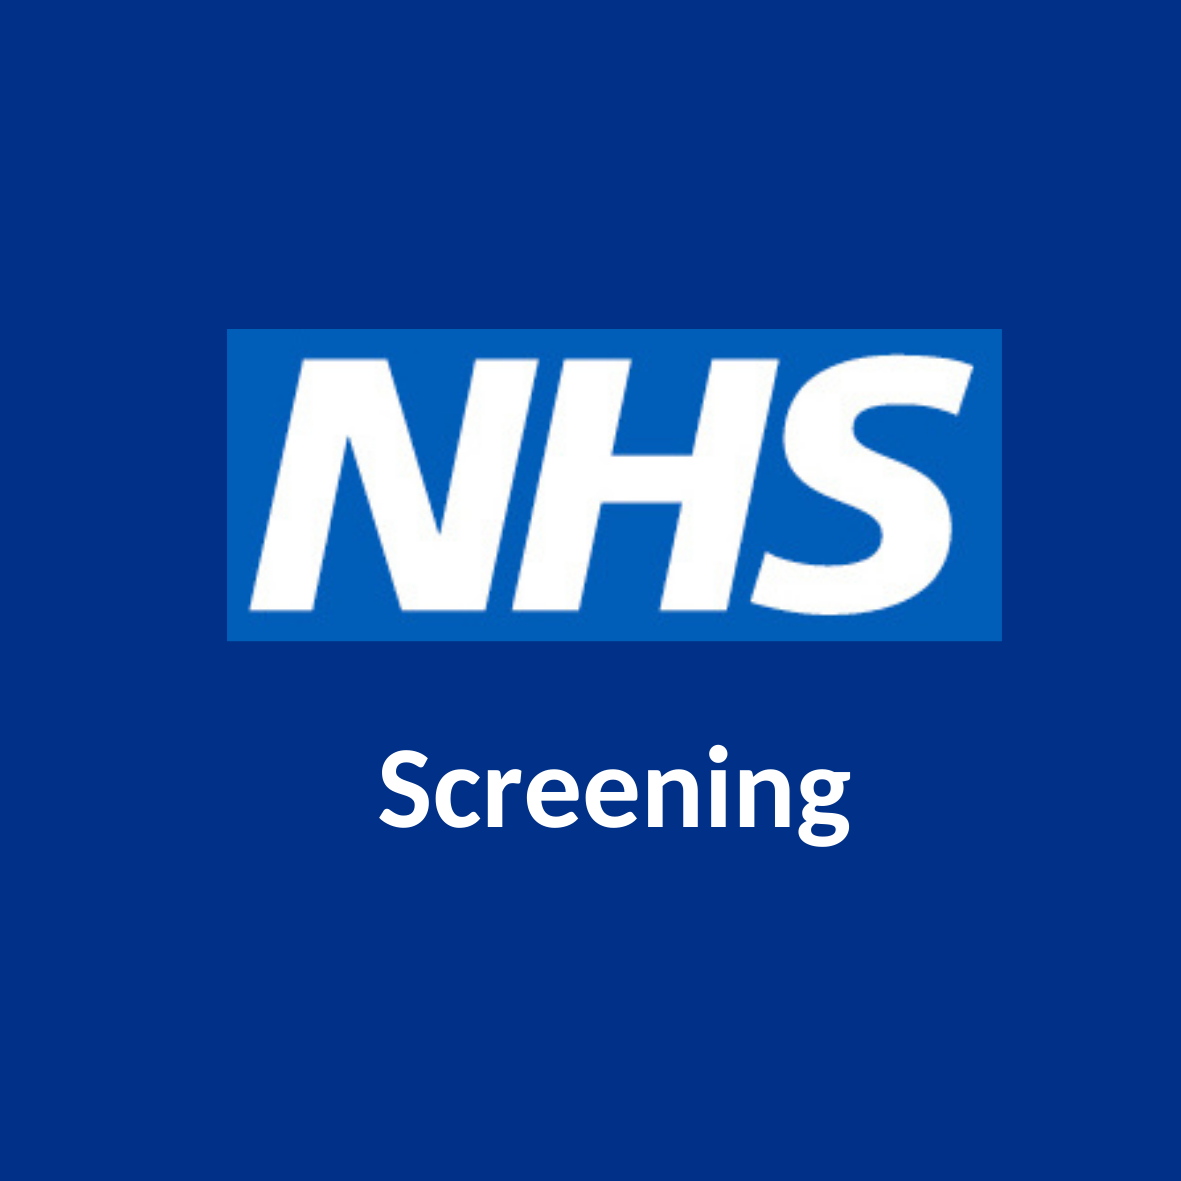 NHS Logo and Word 'Screening'